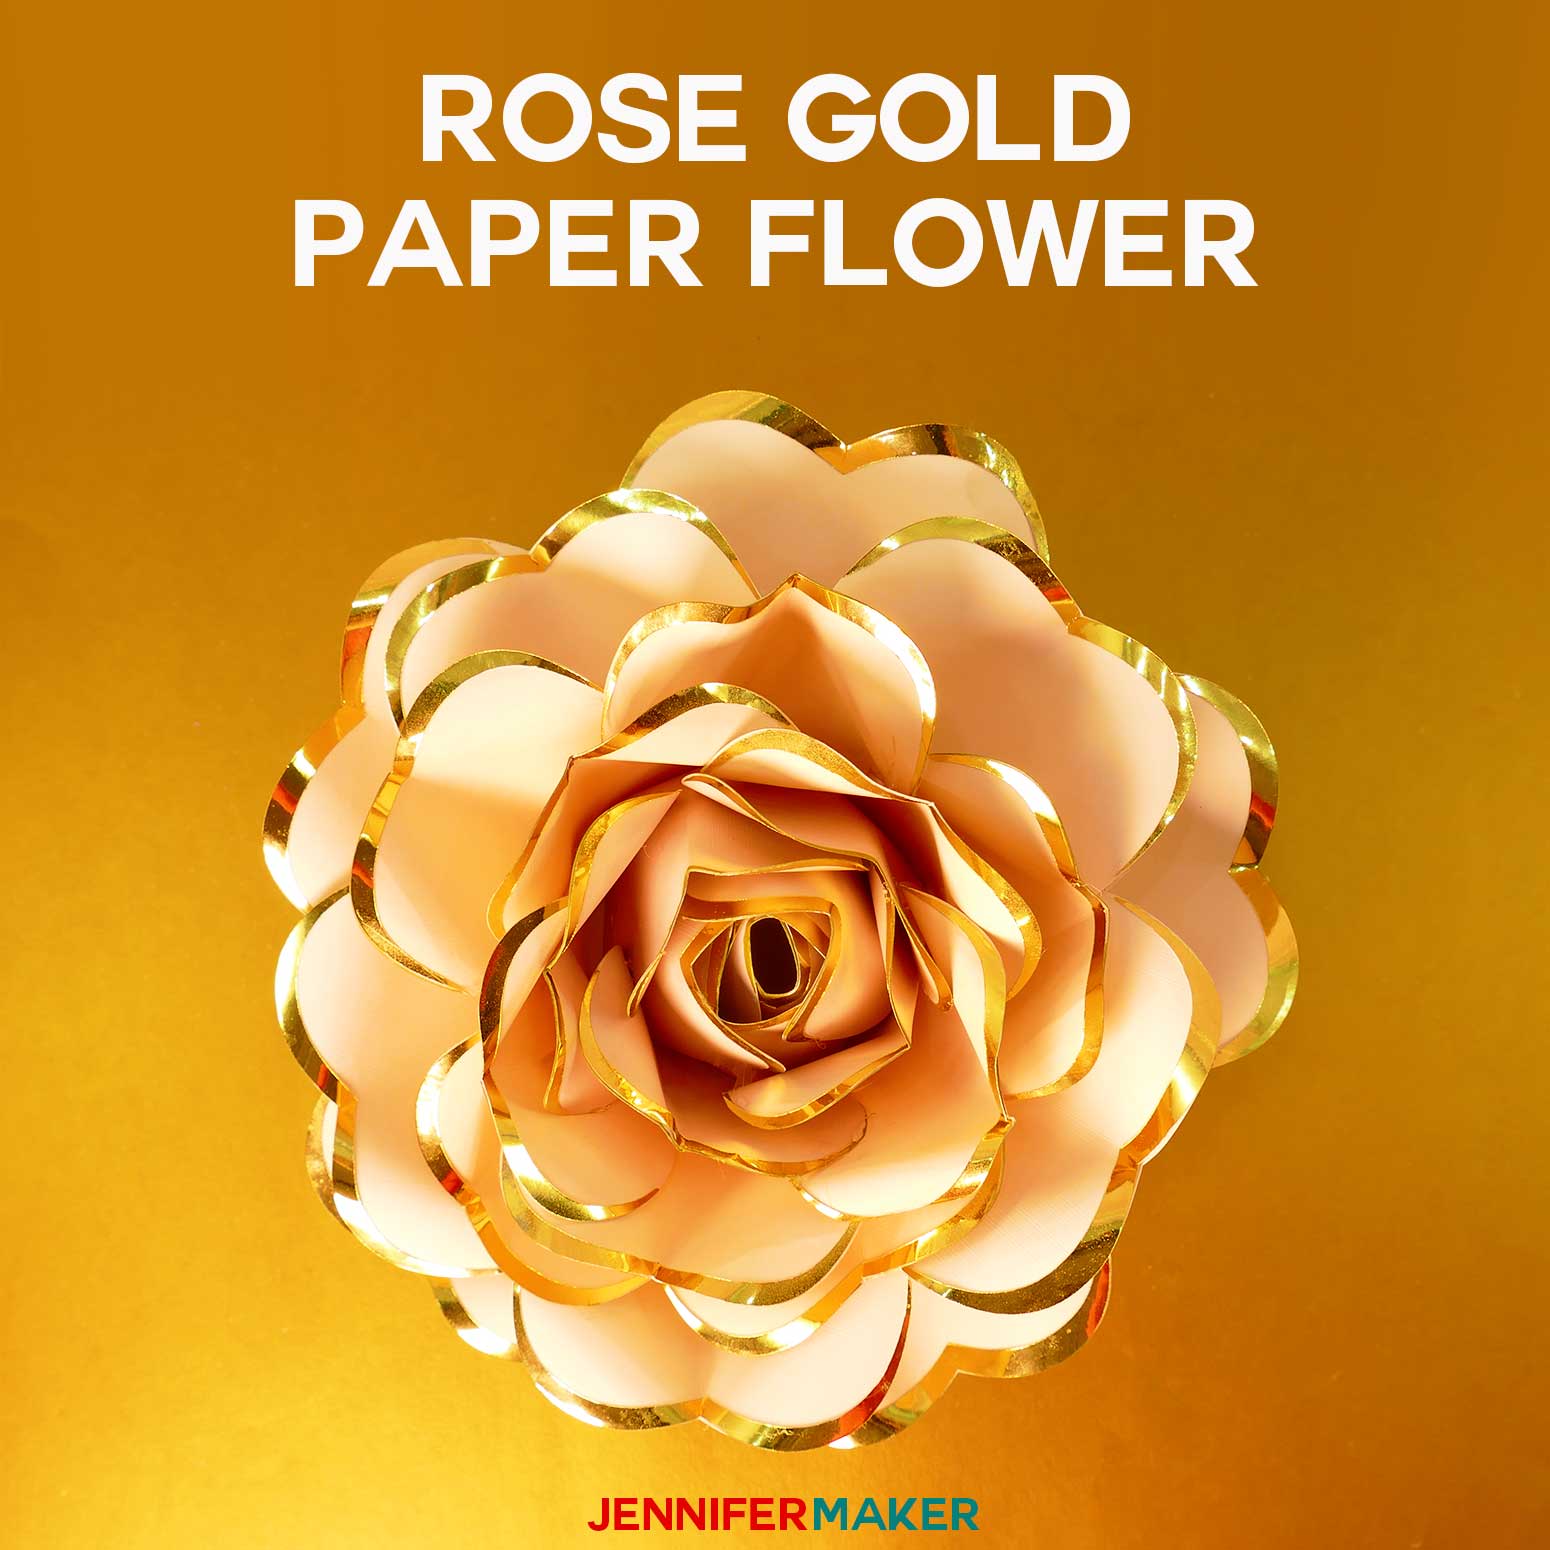 Rose Gold Paper Flower – Foil Edged Heart-Shaped Petals